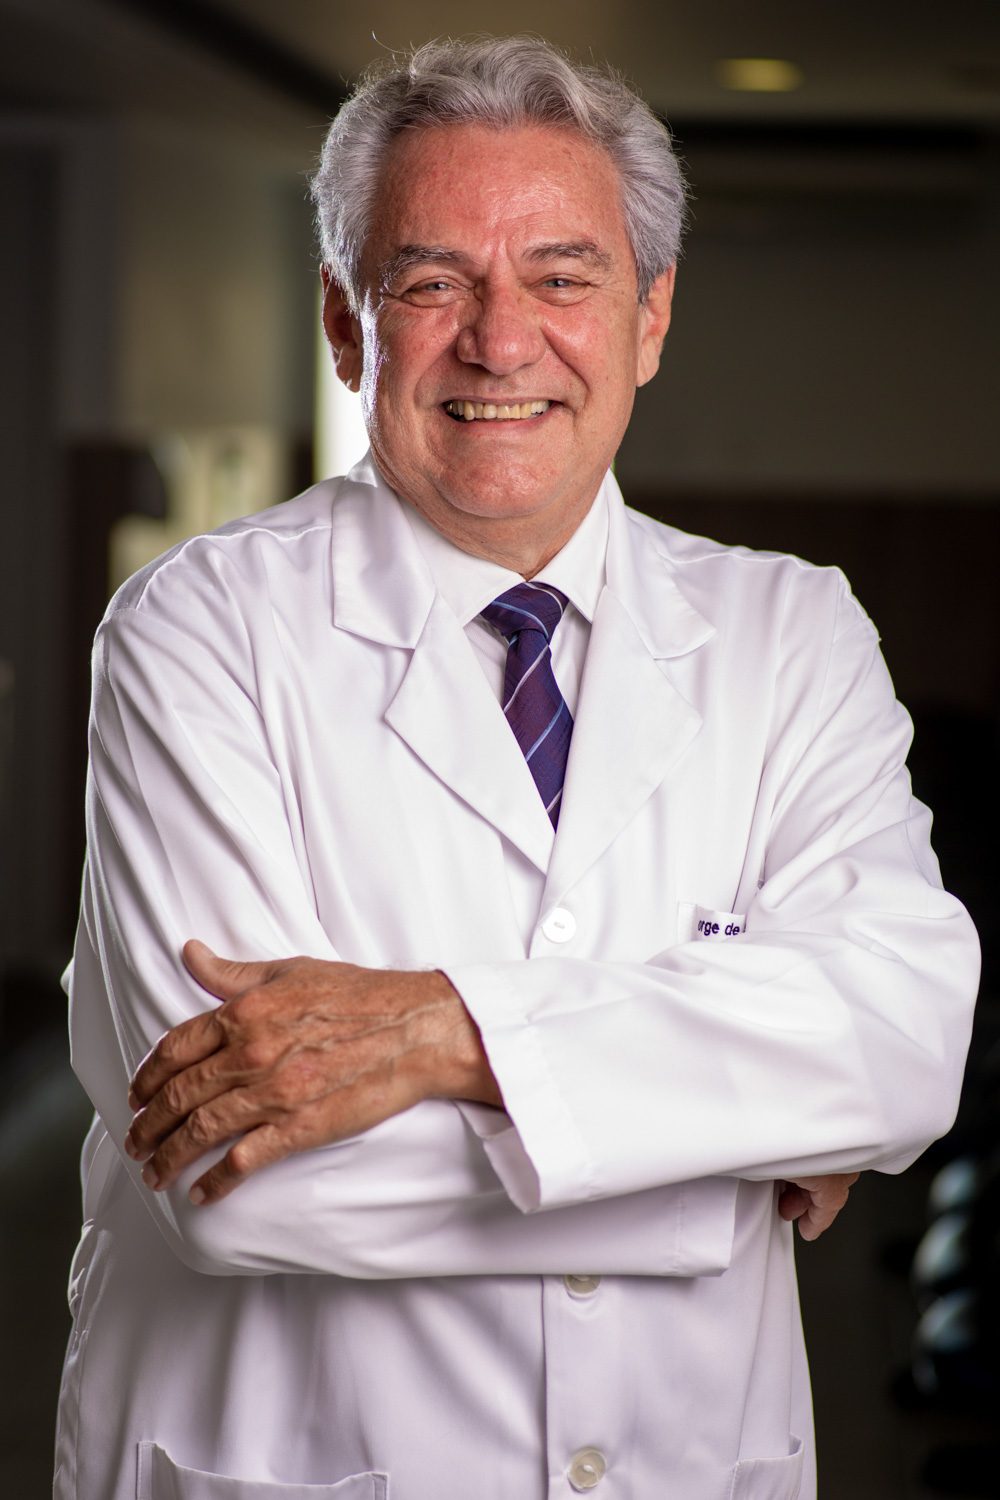 Dr Jorge jaleco